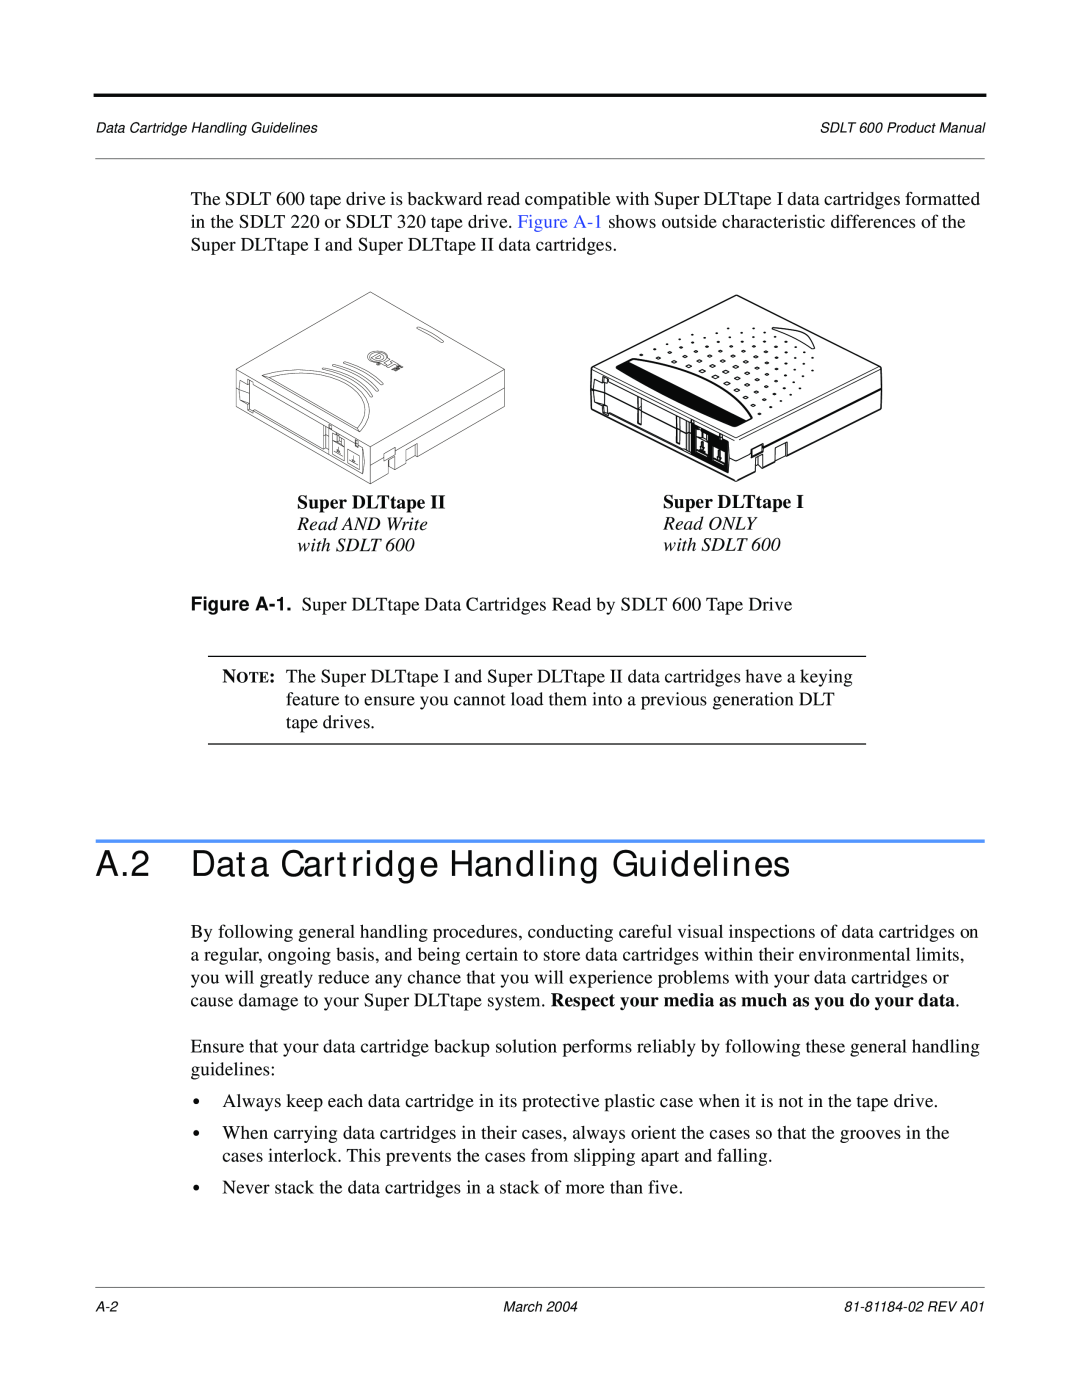 Tandberg Data 600 manual A.2 Data Cartridge Handling Guidelines, Super DLTtape 